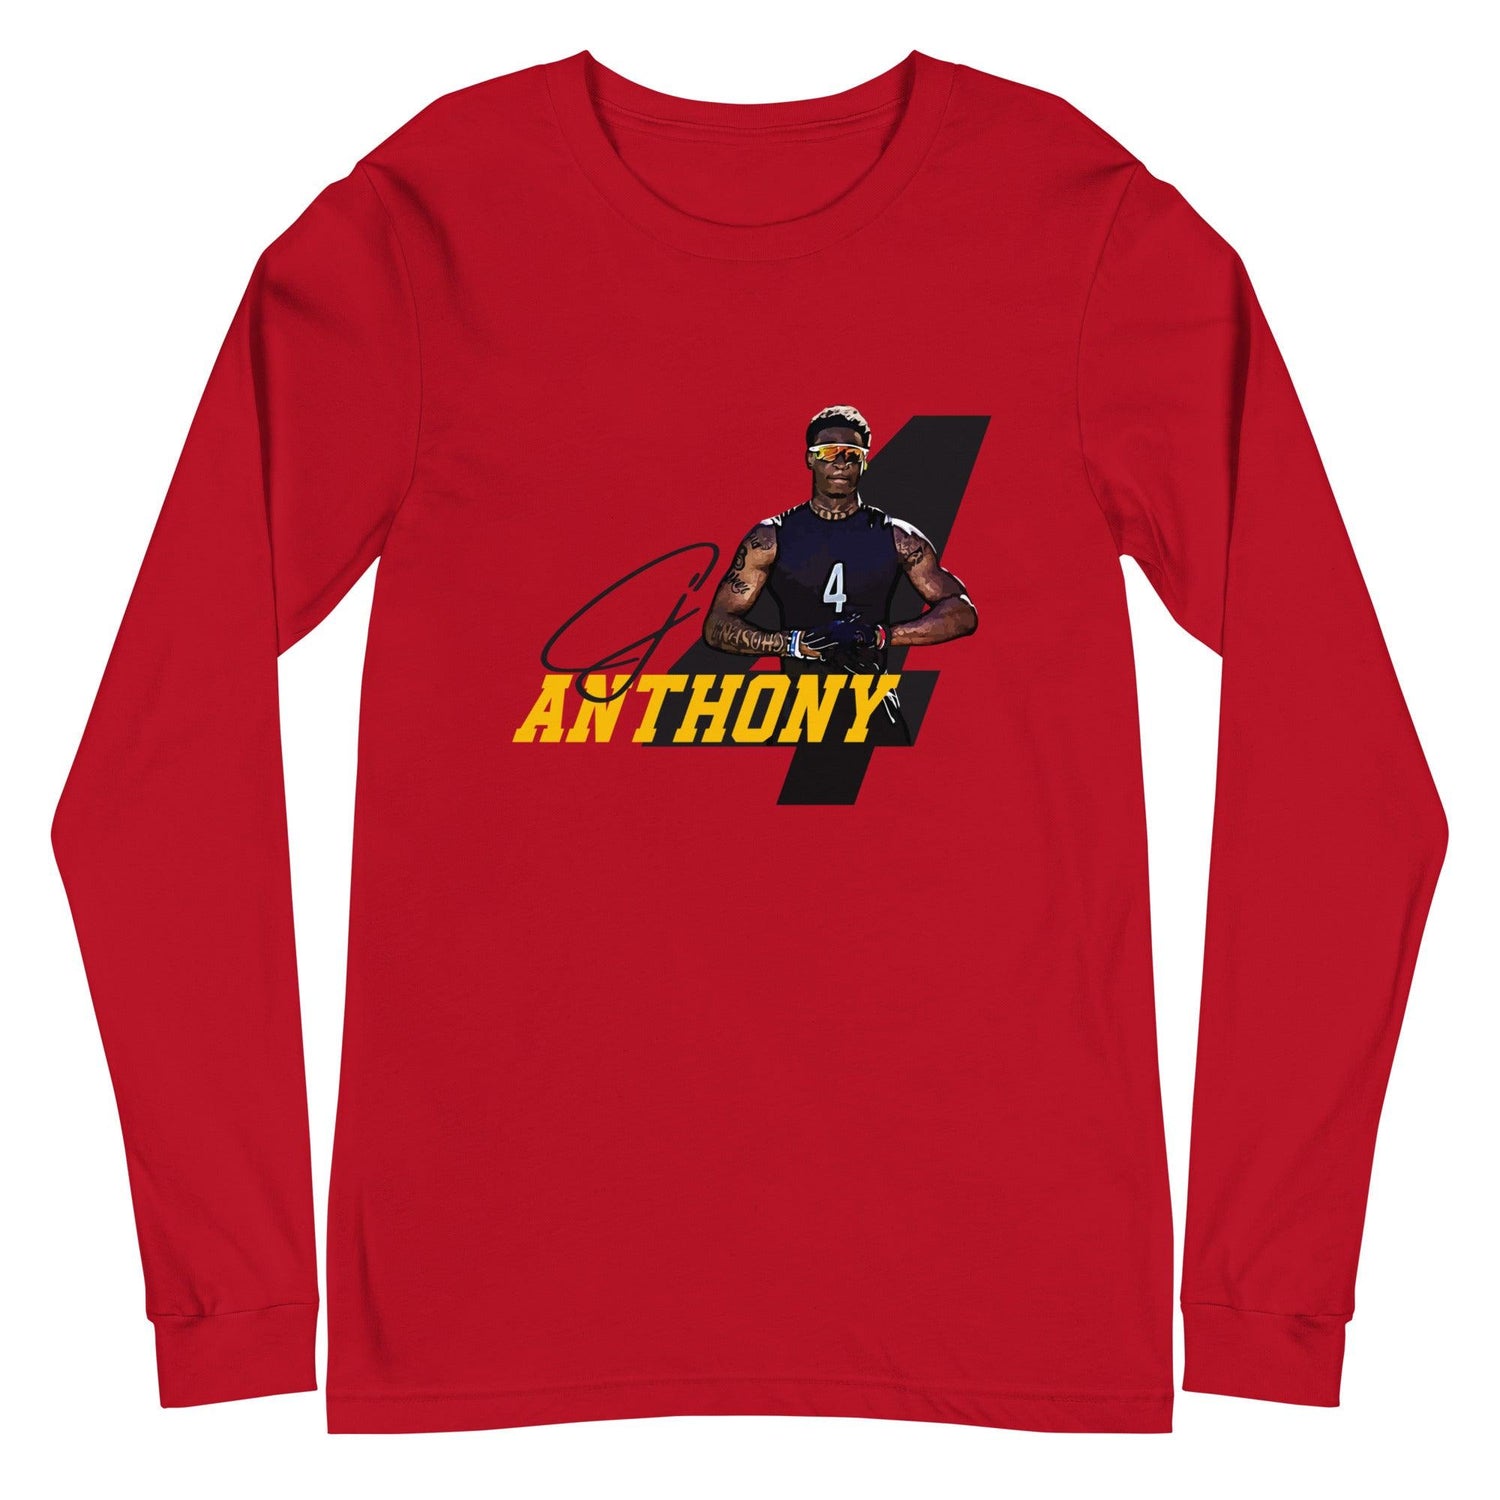 CJ Anthony "Gameday" Long Sleeve Tee - Fan Arch